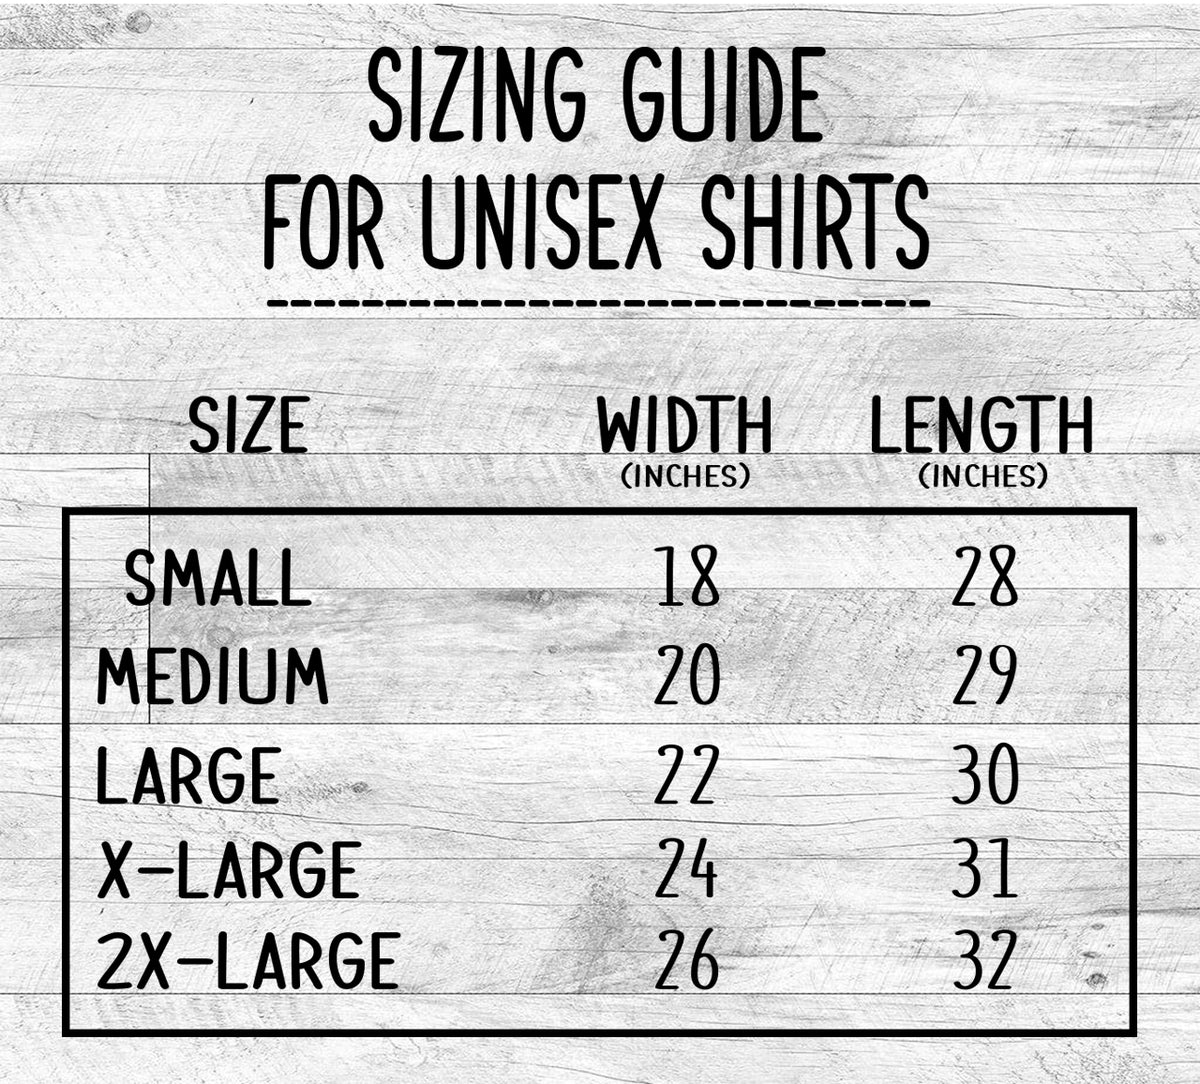 Gransaurus - Unisex T-shirt - Gran Shirt - Gift For New Gran